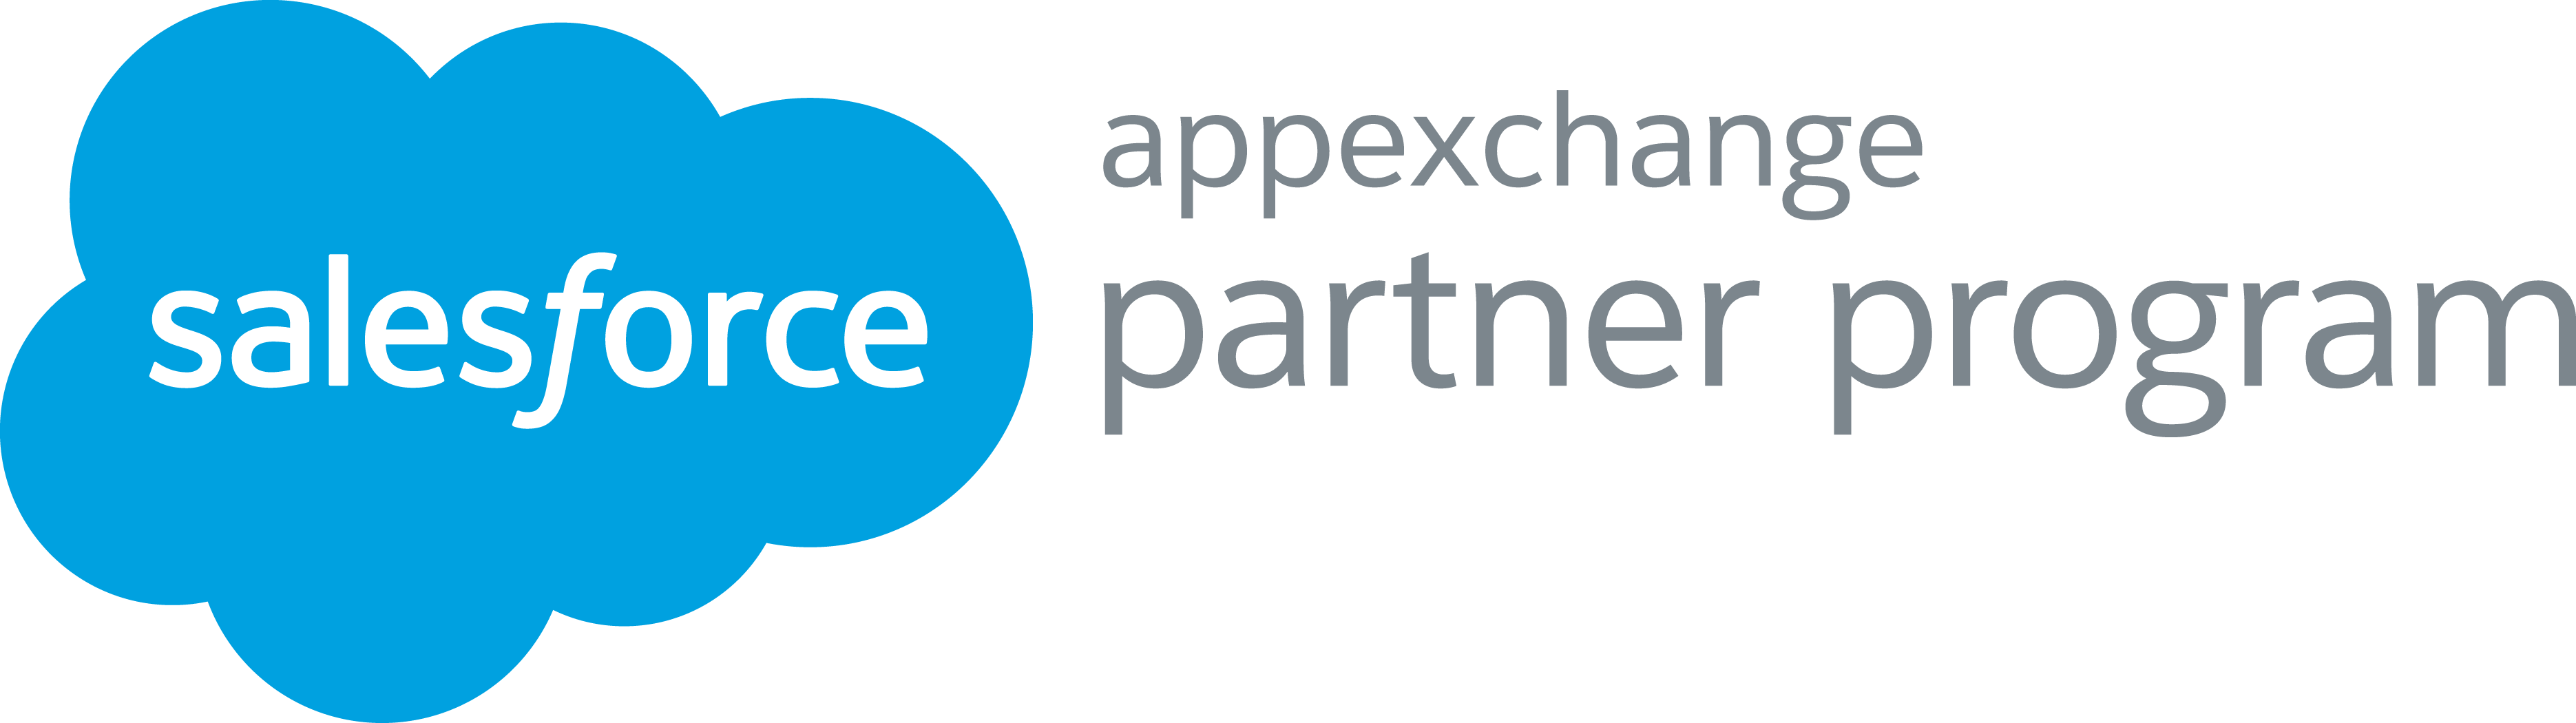 2015sf_Partner_AppexchangePartnerProgram_logo_RGB.png